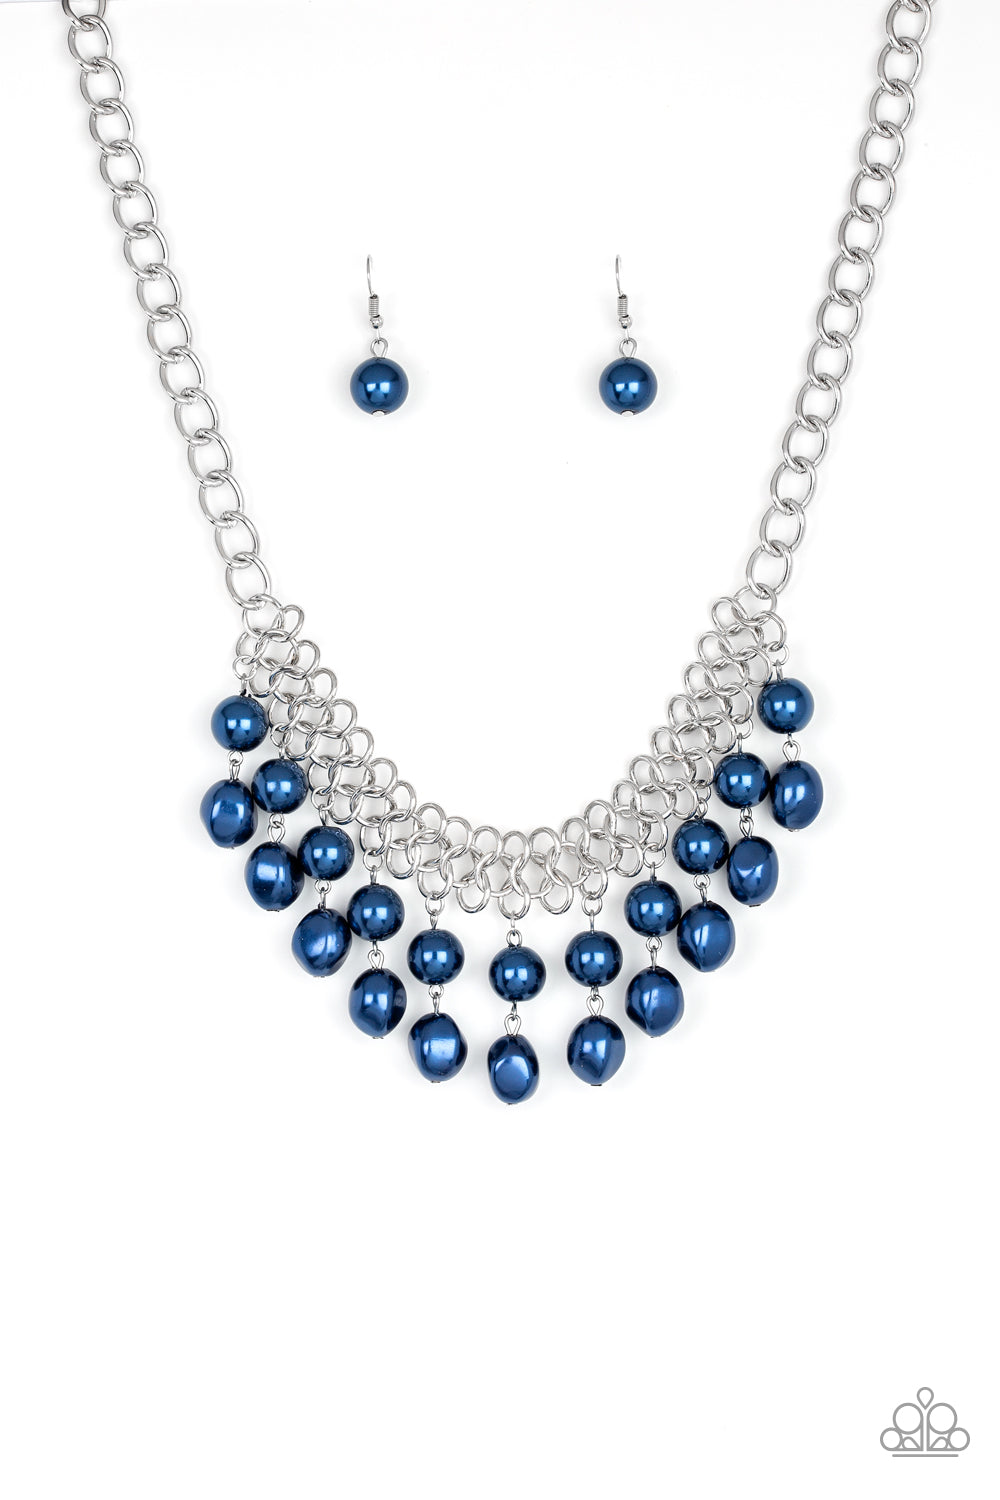 Paparazzi - 5th Avenue Fleek - Blue Necklace & Earrings - Alies Bling Bar